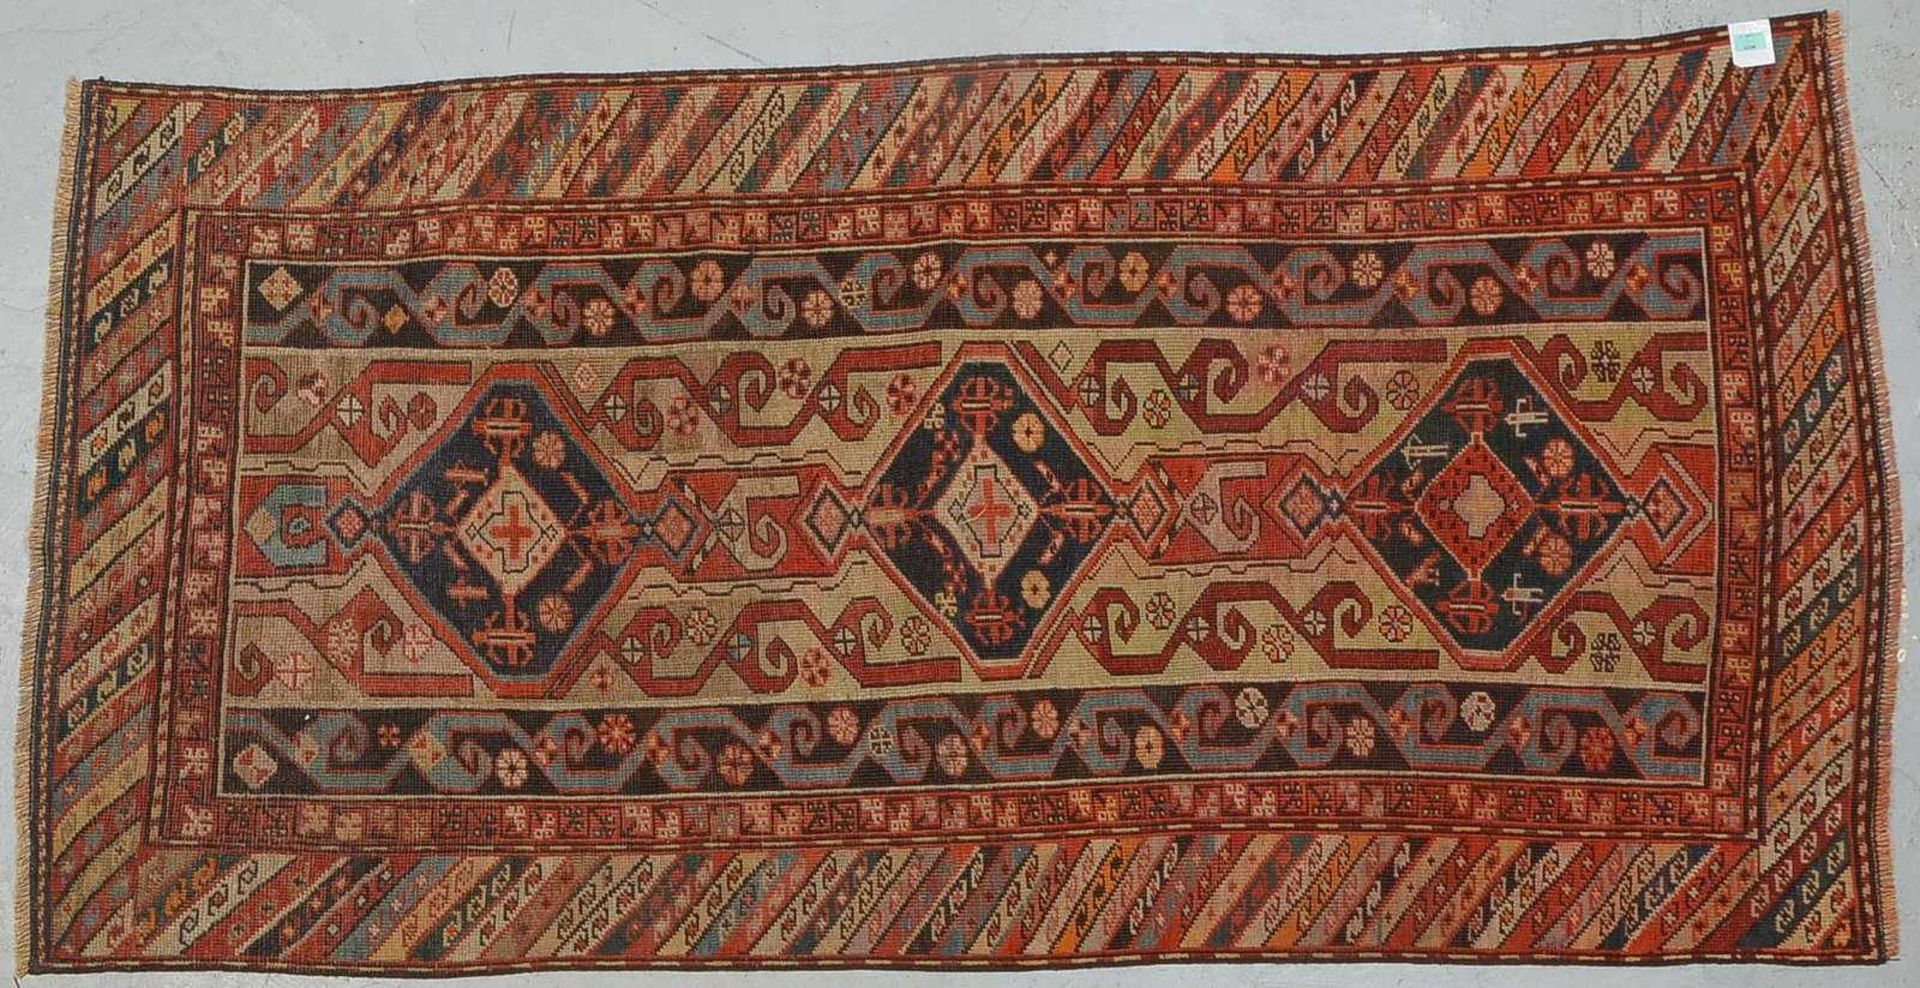 Orientteppich, Kaukasus, antik, Moharamat-Muster, mit rotem Schuss, ringsum komplett, gleichmäßig